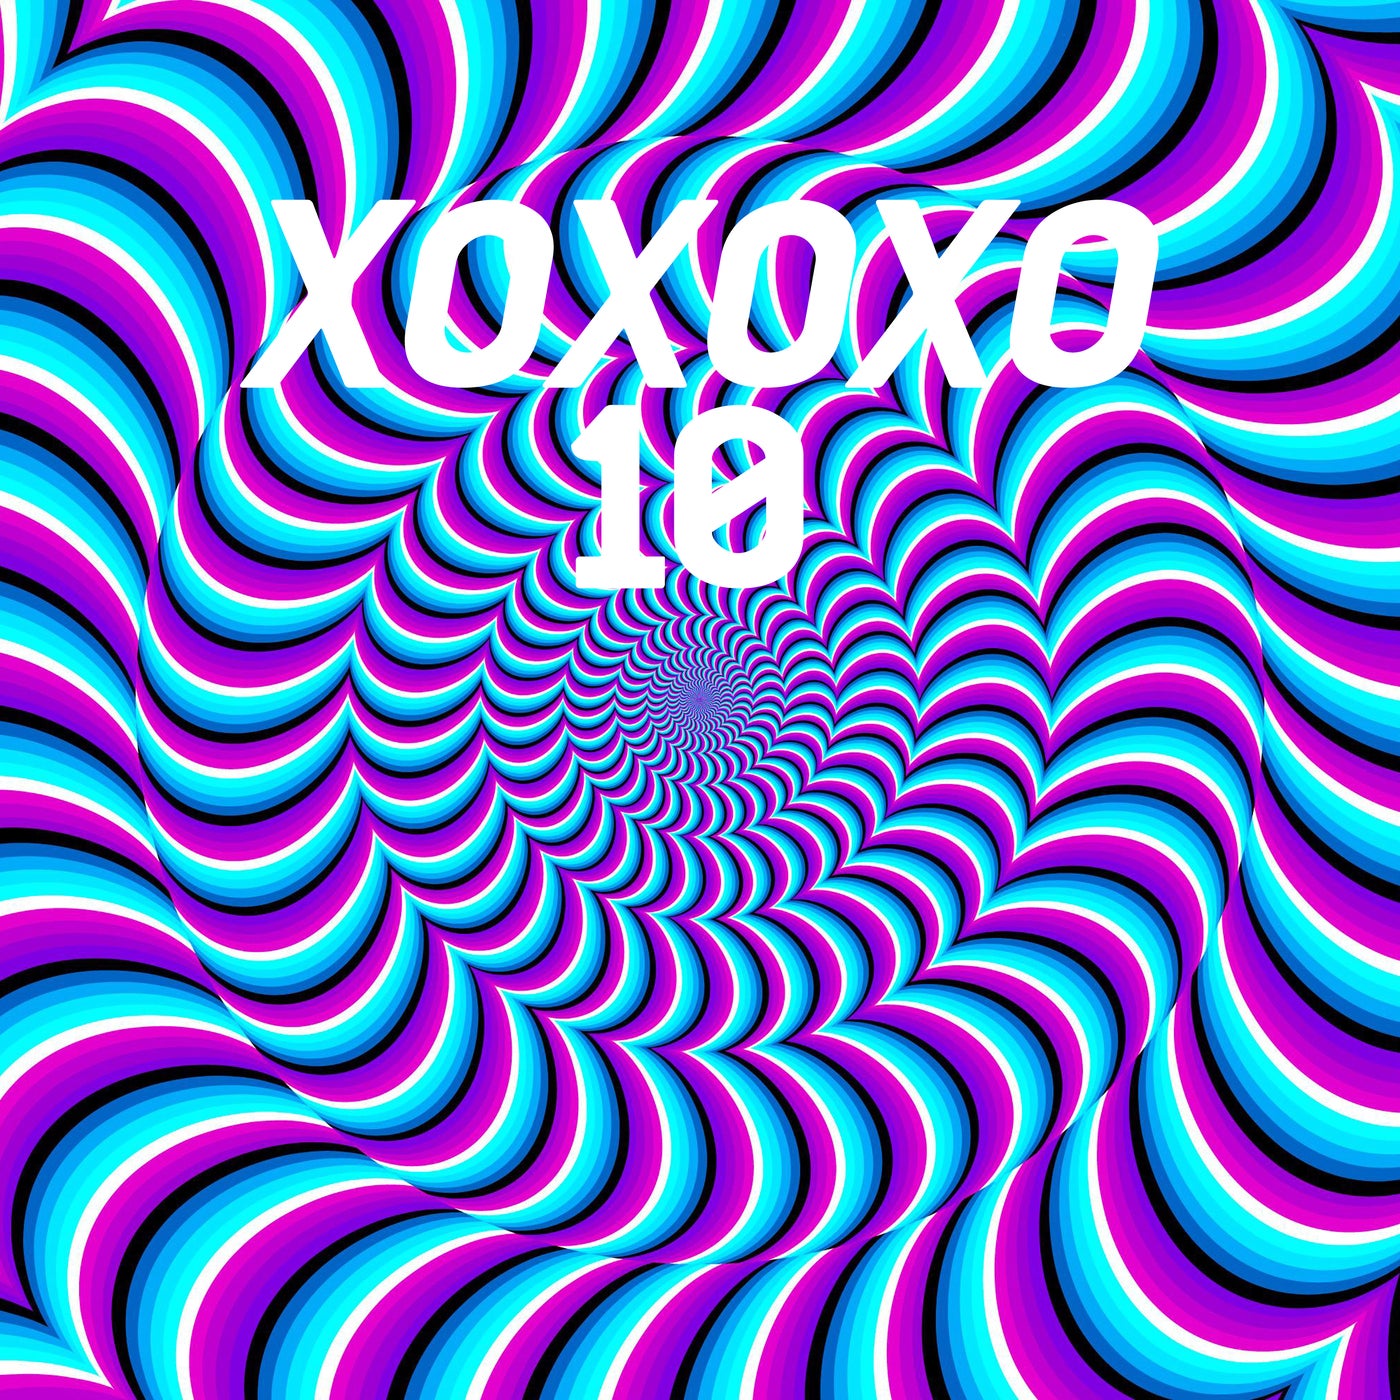 image cover: VA - XOXOXO 10 / FP183